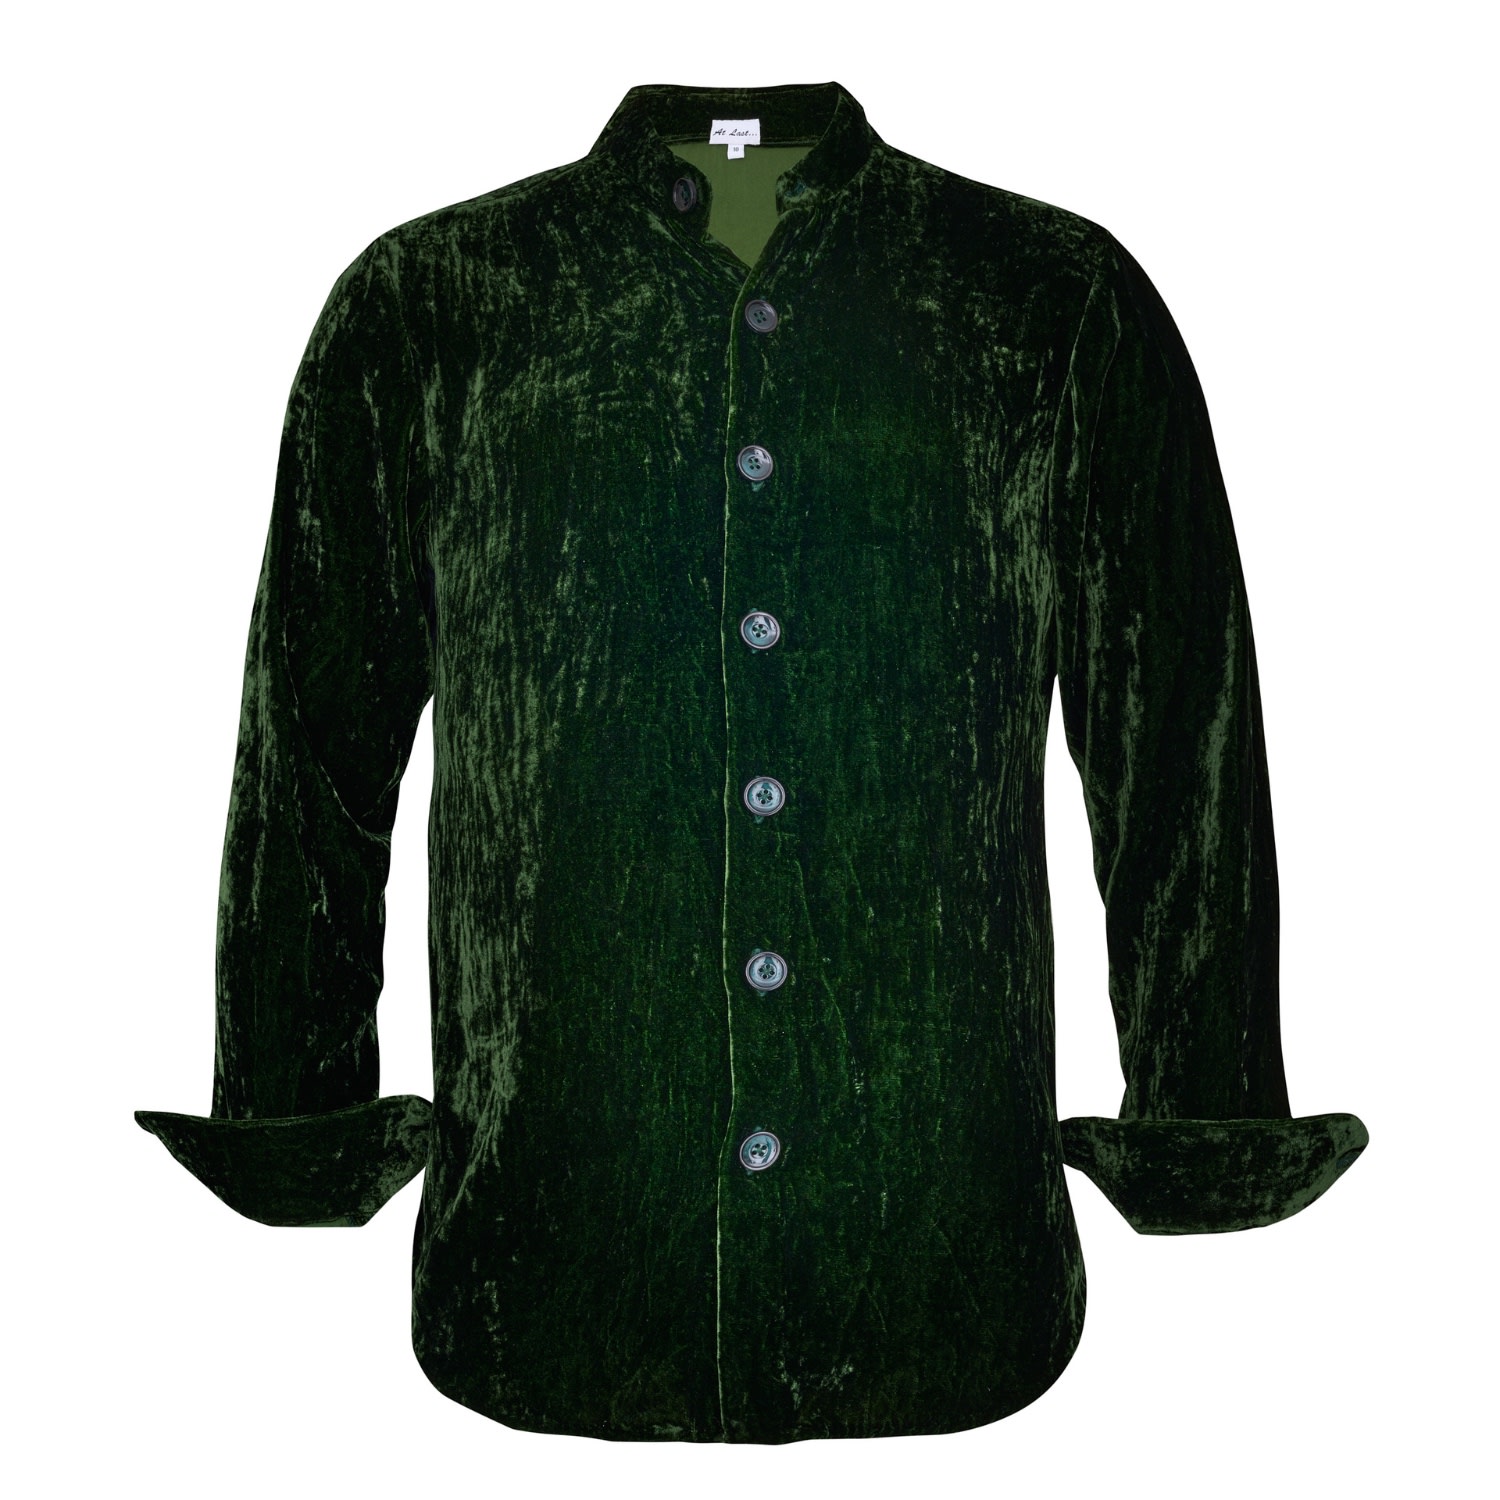 Silk Velvet Men’s Shirt In Forest Green With Mandarin Collar Small At Last...